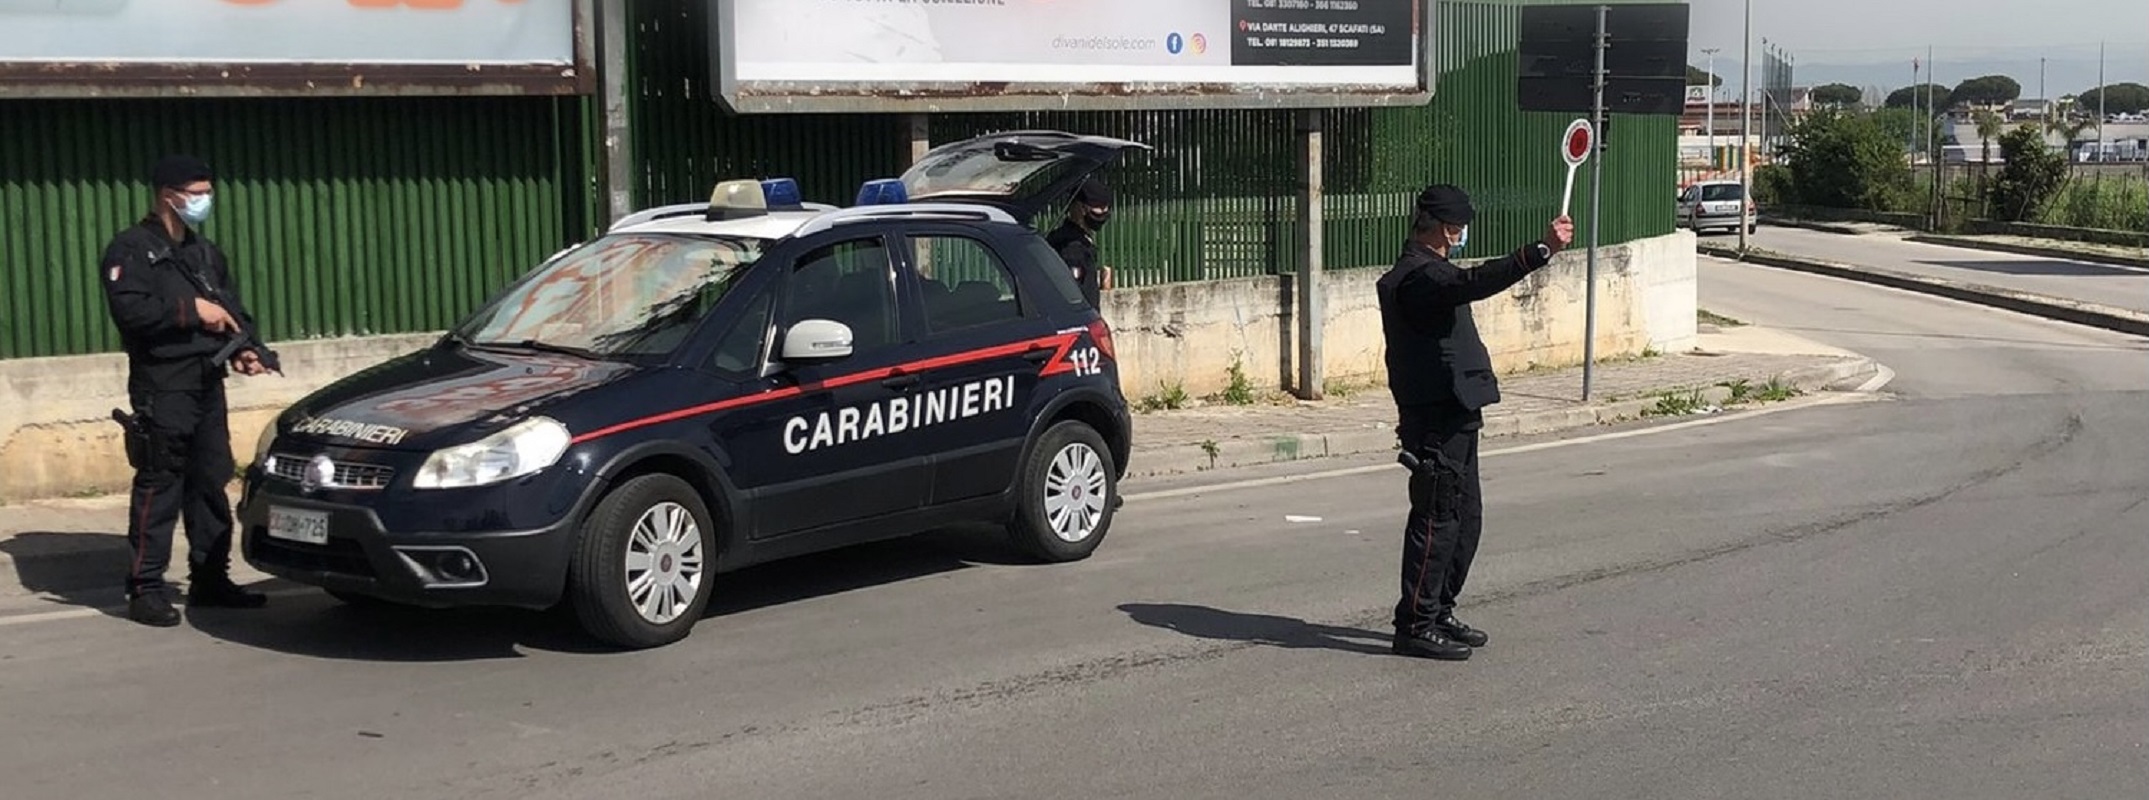 controlli dei carabinieri